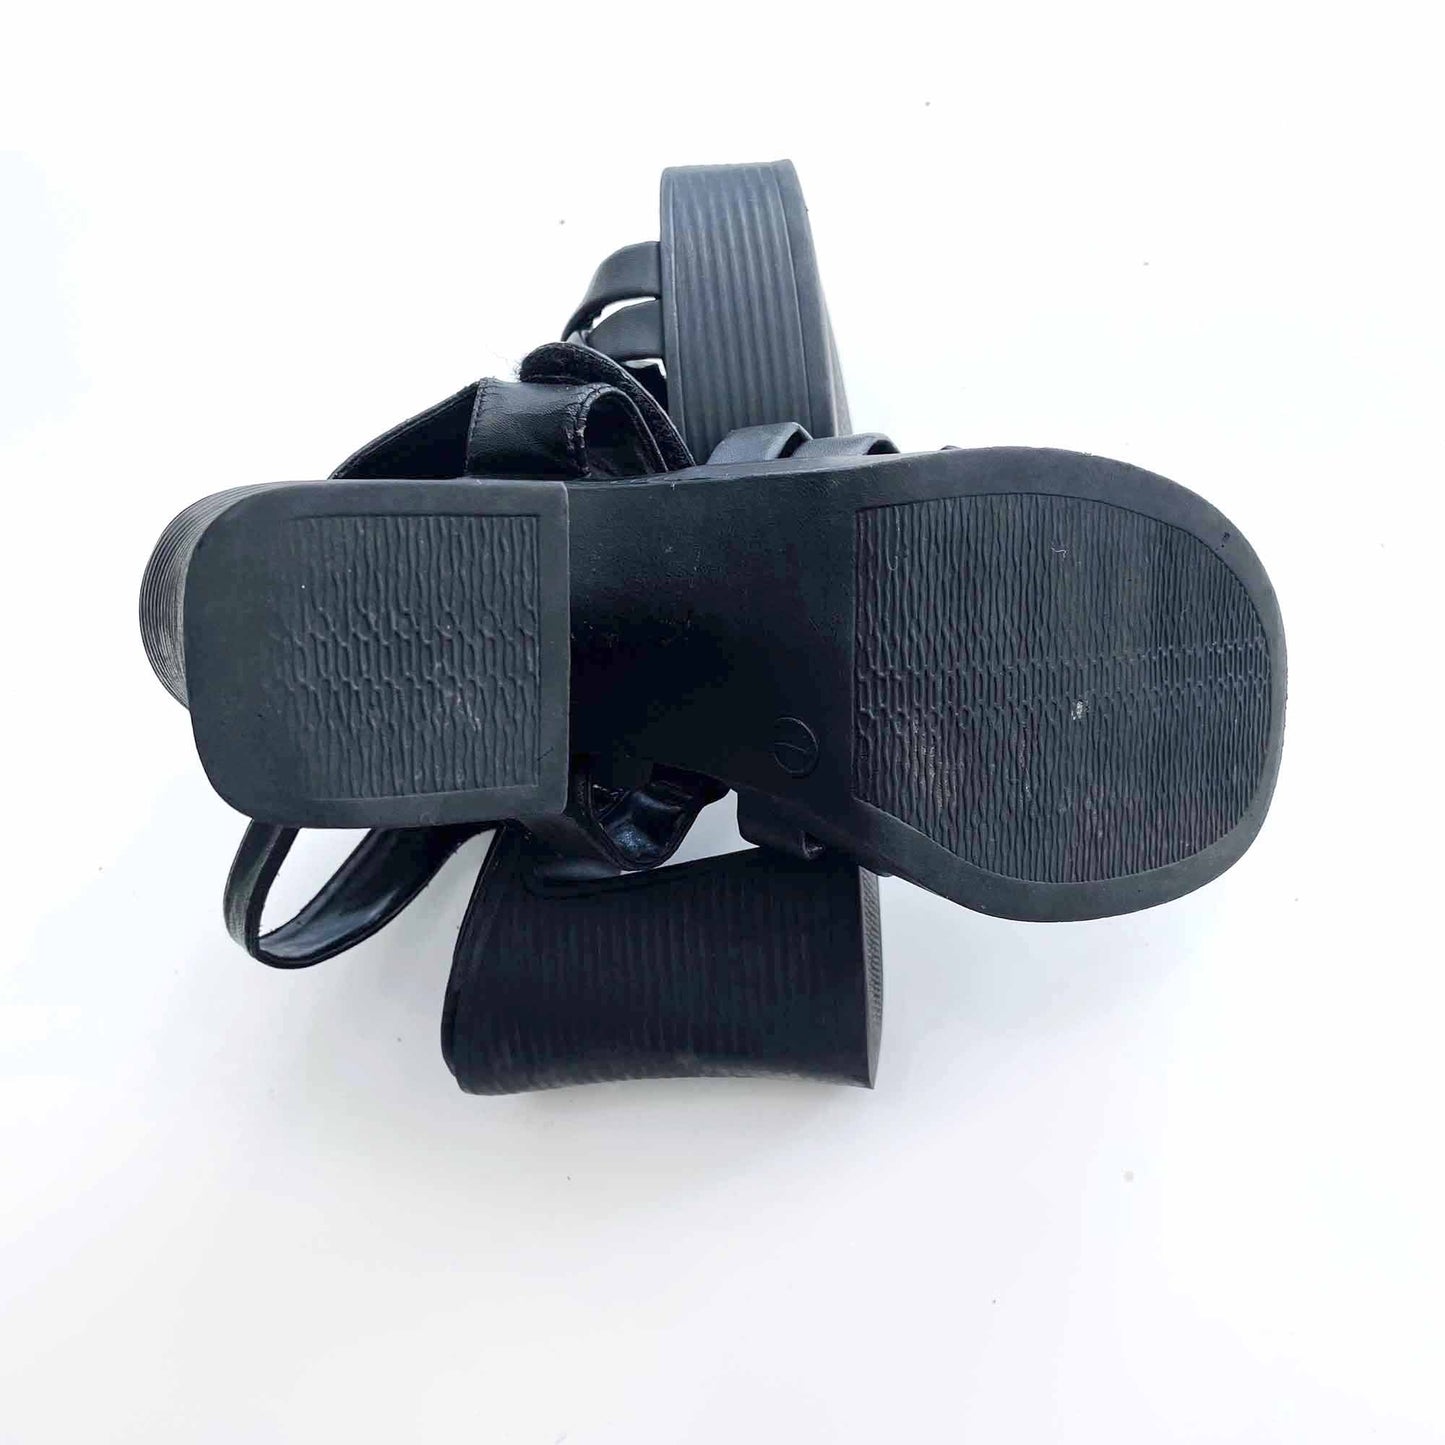 vintage bata chonky sole strappy platform sandal - size 7